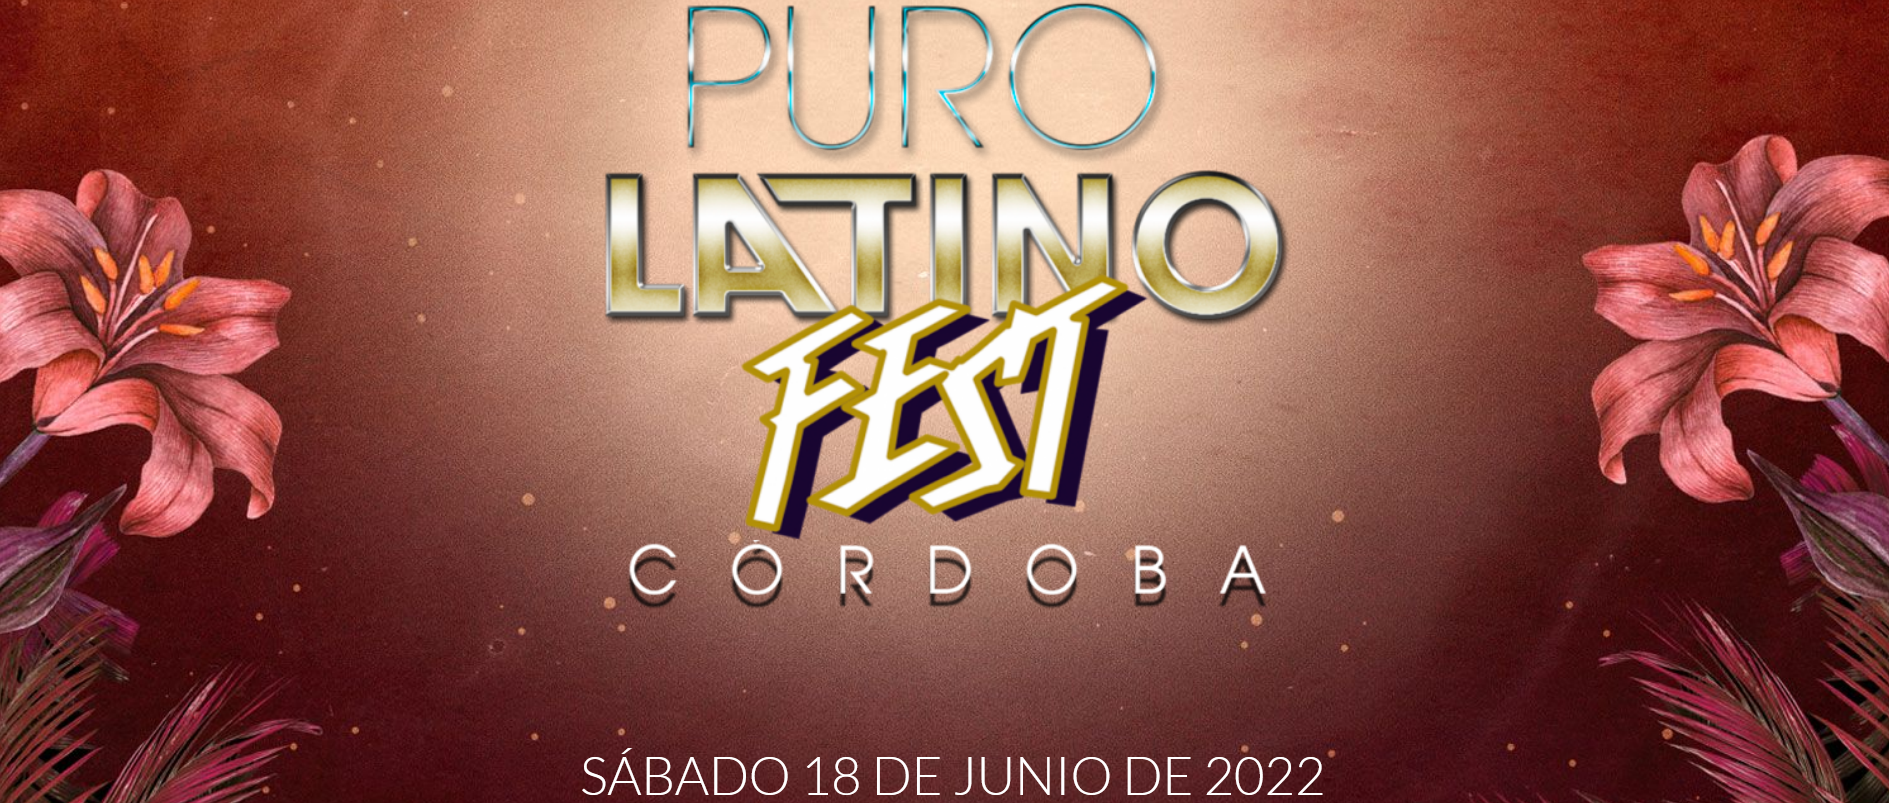 Puro Latino Fest - Córdoba